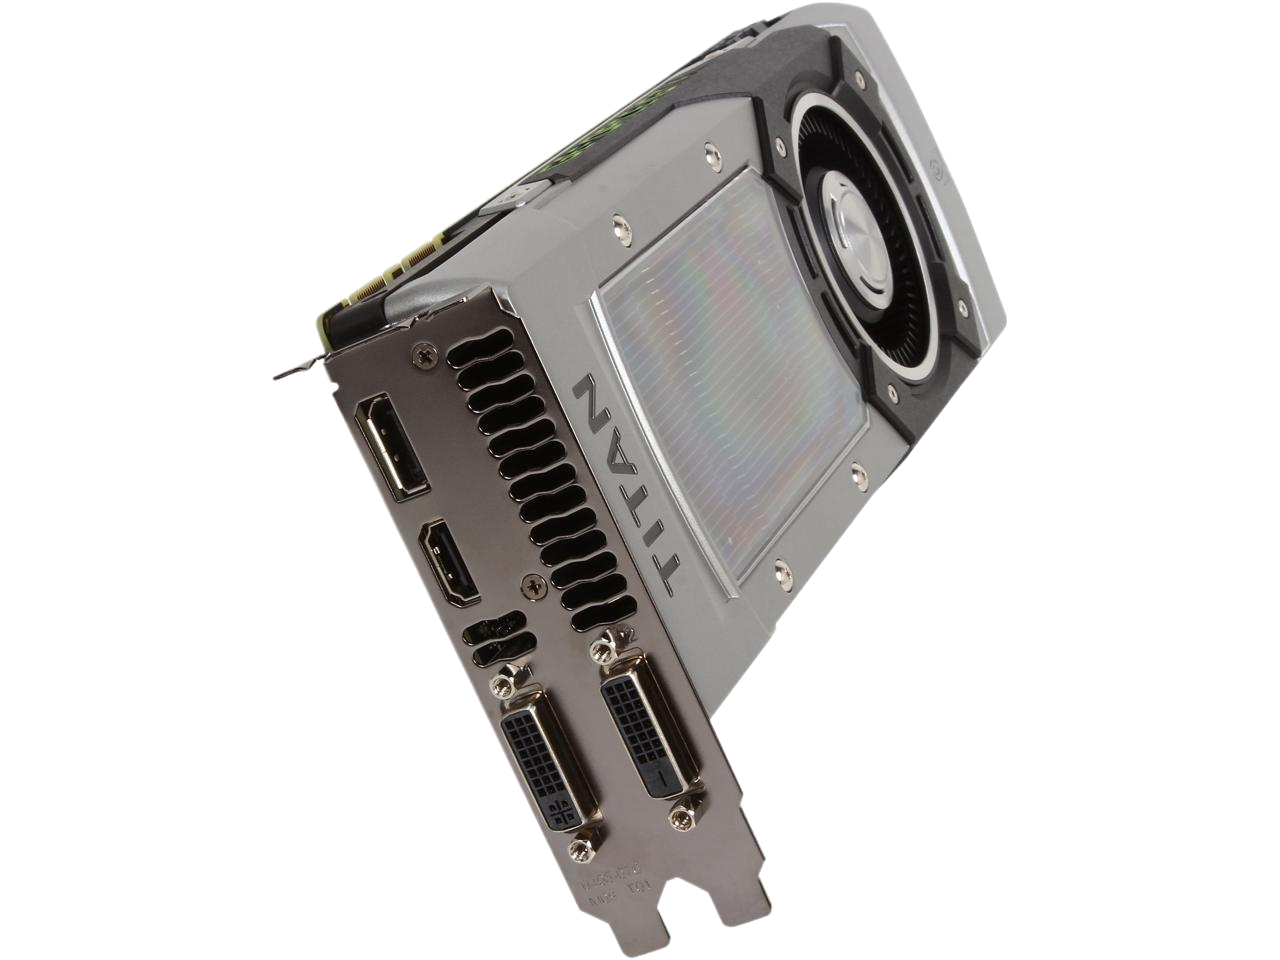 ASUS GeForce GTX TITAN 6GB GDDR5 PCI Express 3.0 SLI Support Video Card GTXTITAN-6GD5